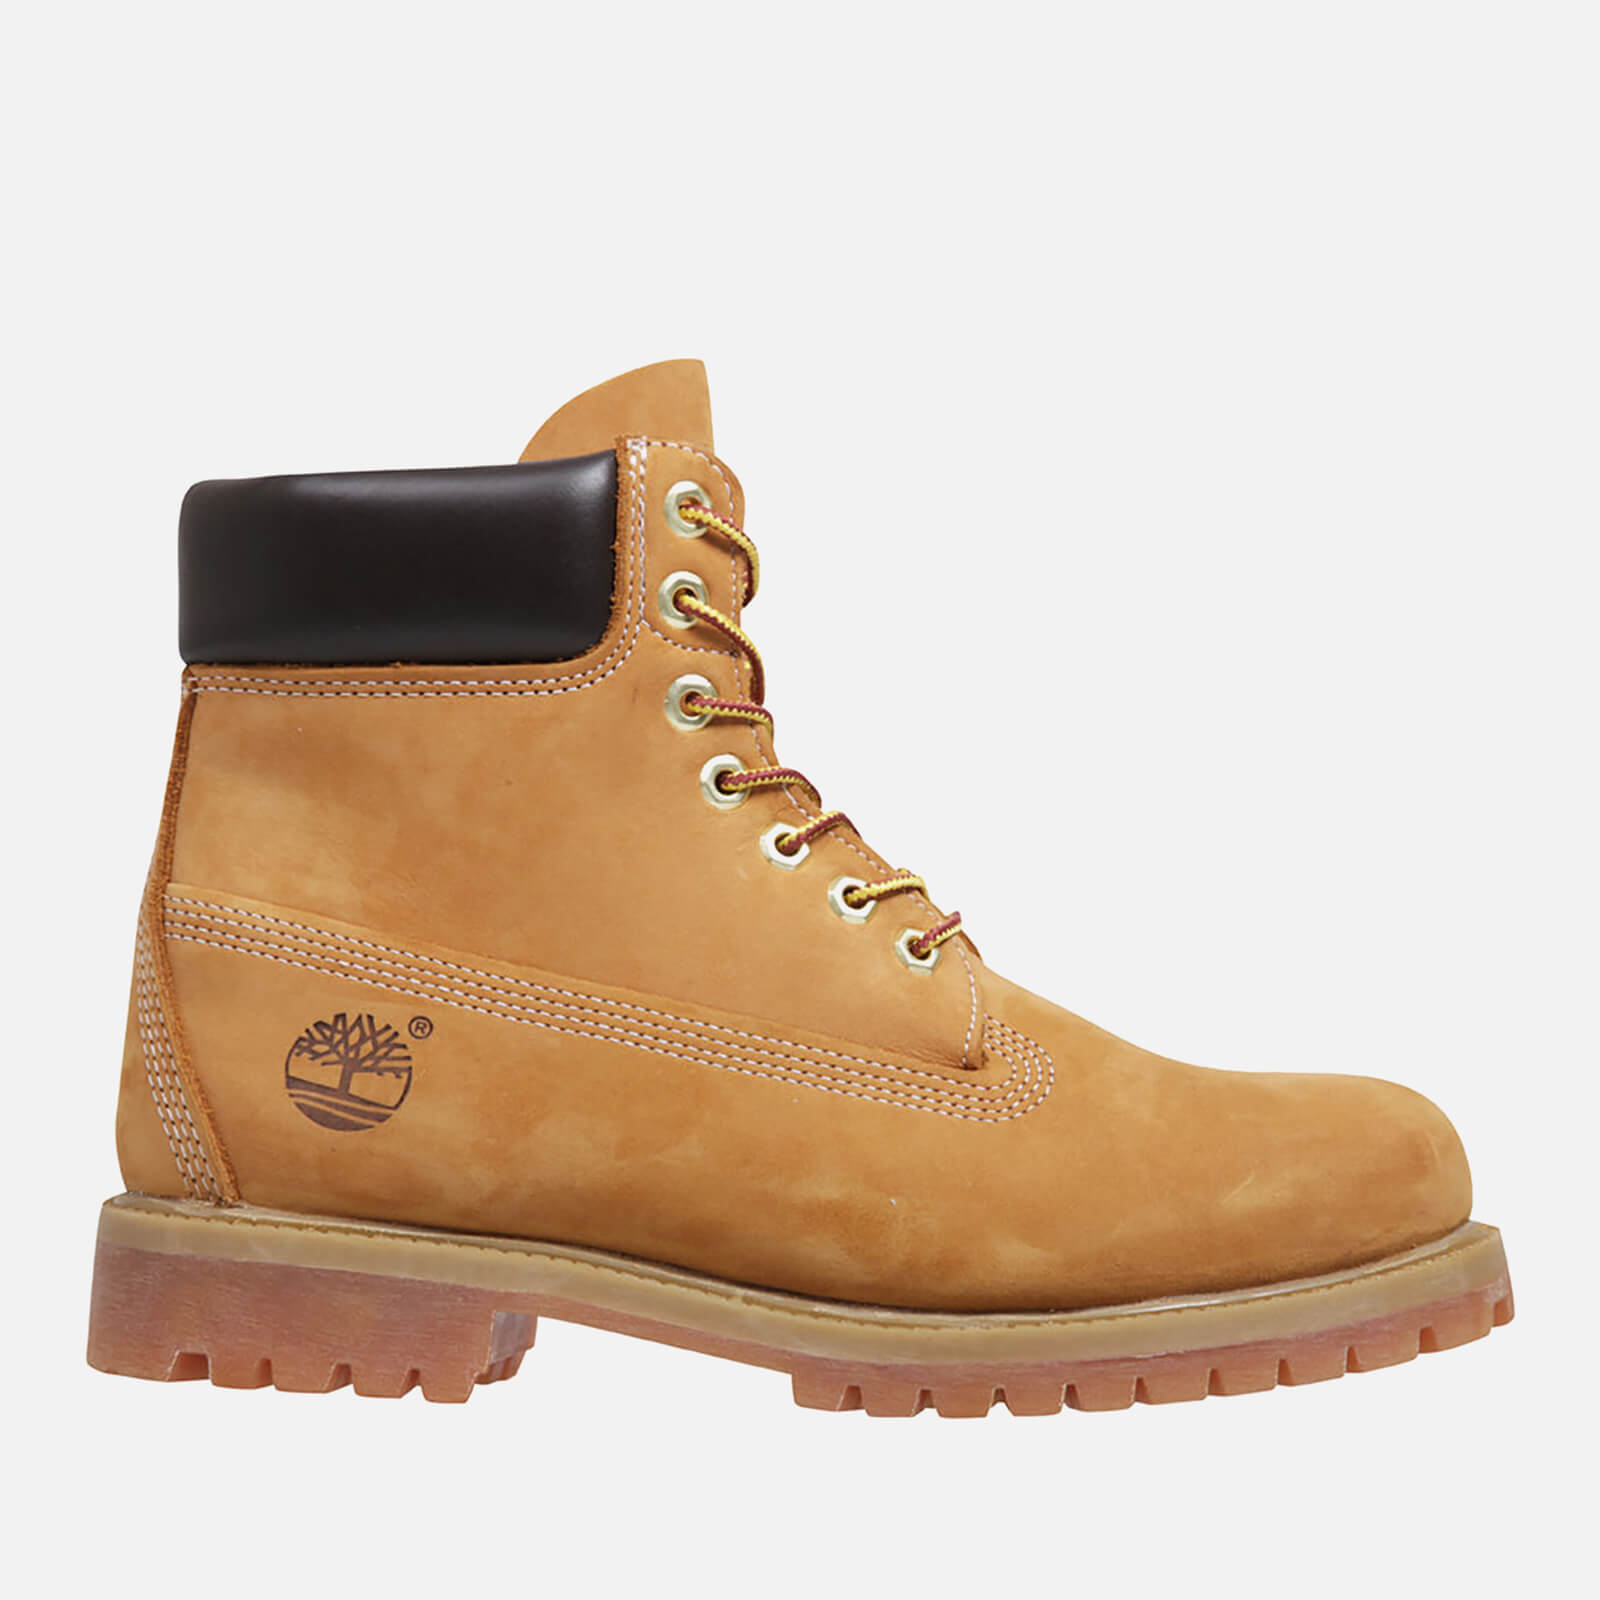 Timberland Men’s 6 Inch Premium Waterproof Boots - Wheat